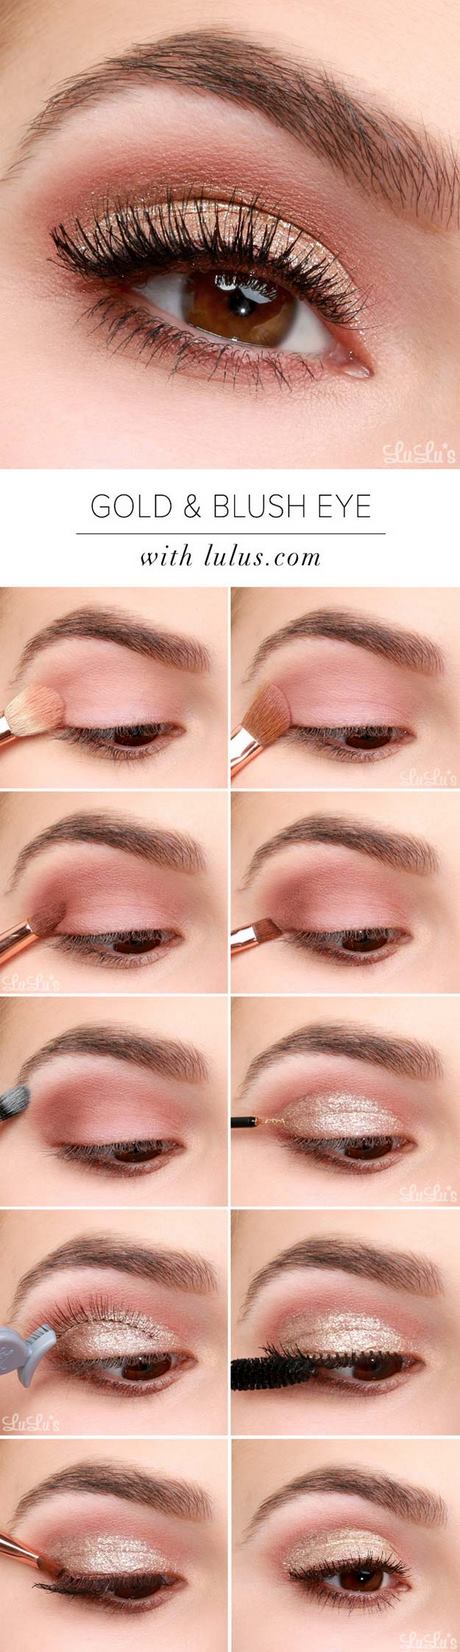 makeup-tips-for-88_10 Make-up tips voor